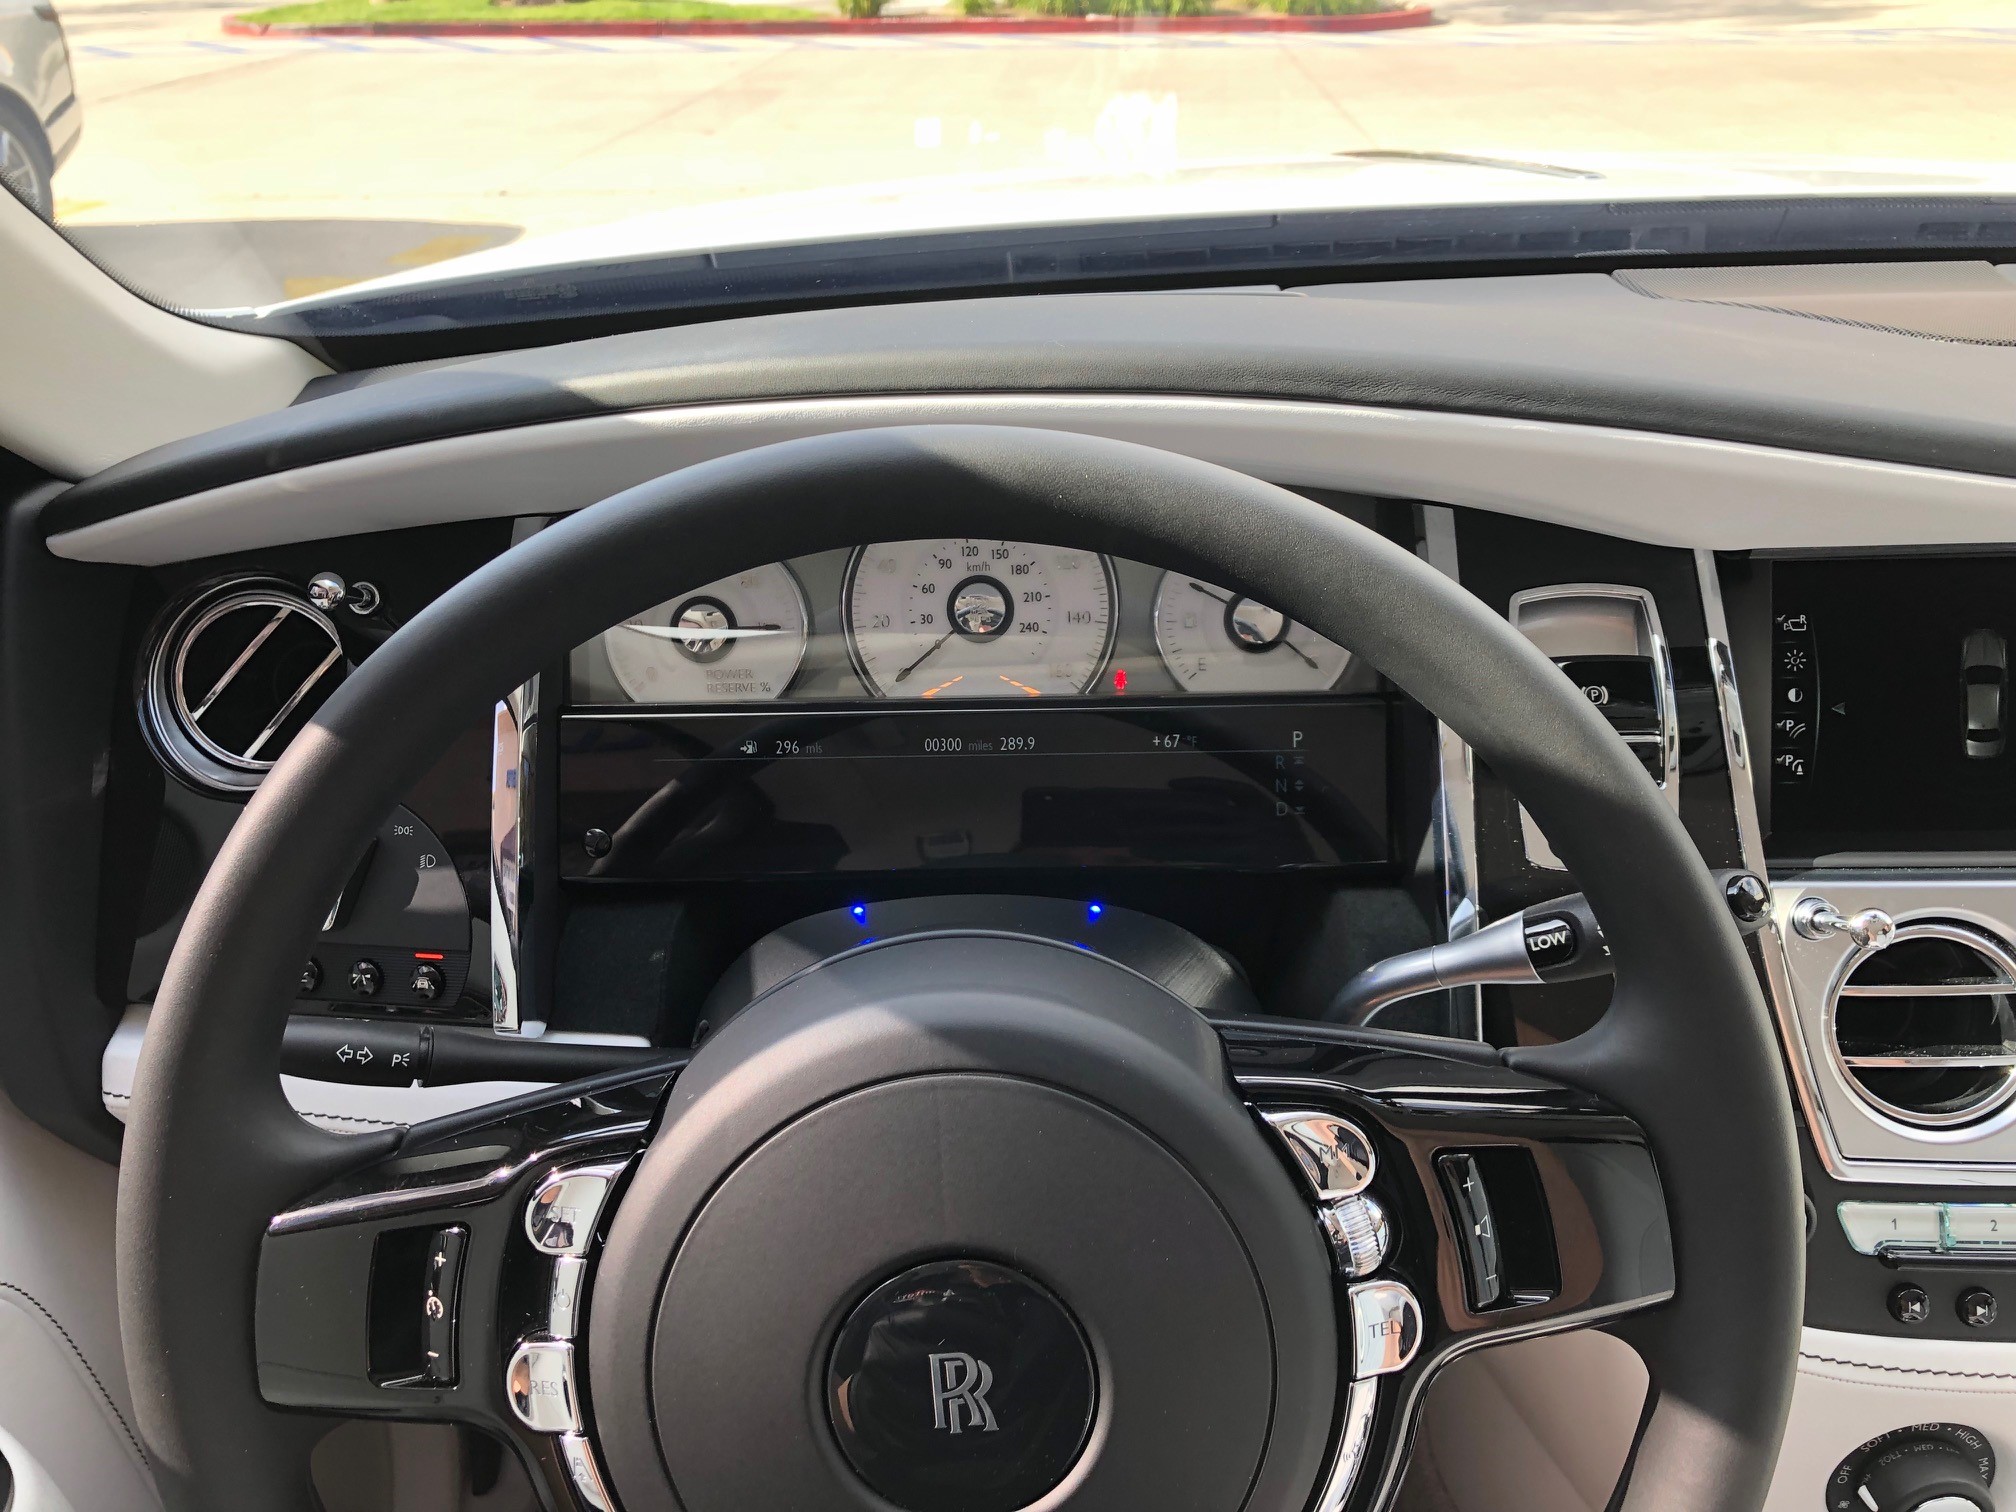 Custom K40 Police Radar Detector Alert LED's Installed on New 2019 Rolls Royce Ghost in Santa Margarita, CA